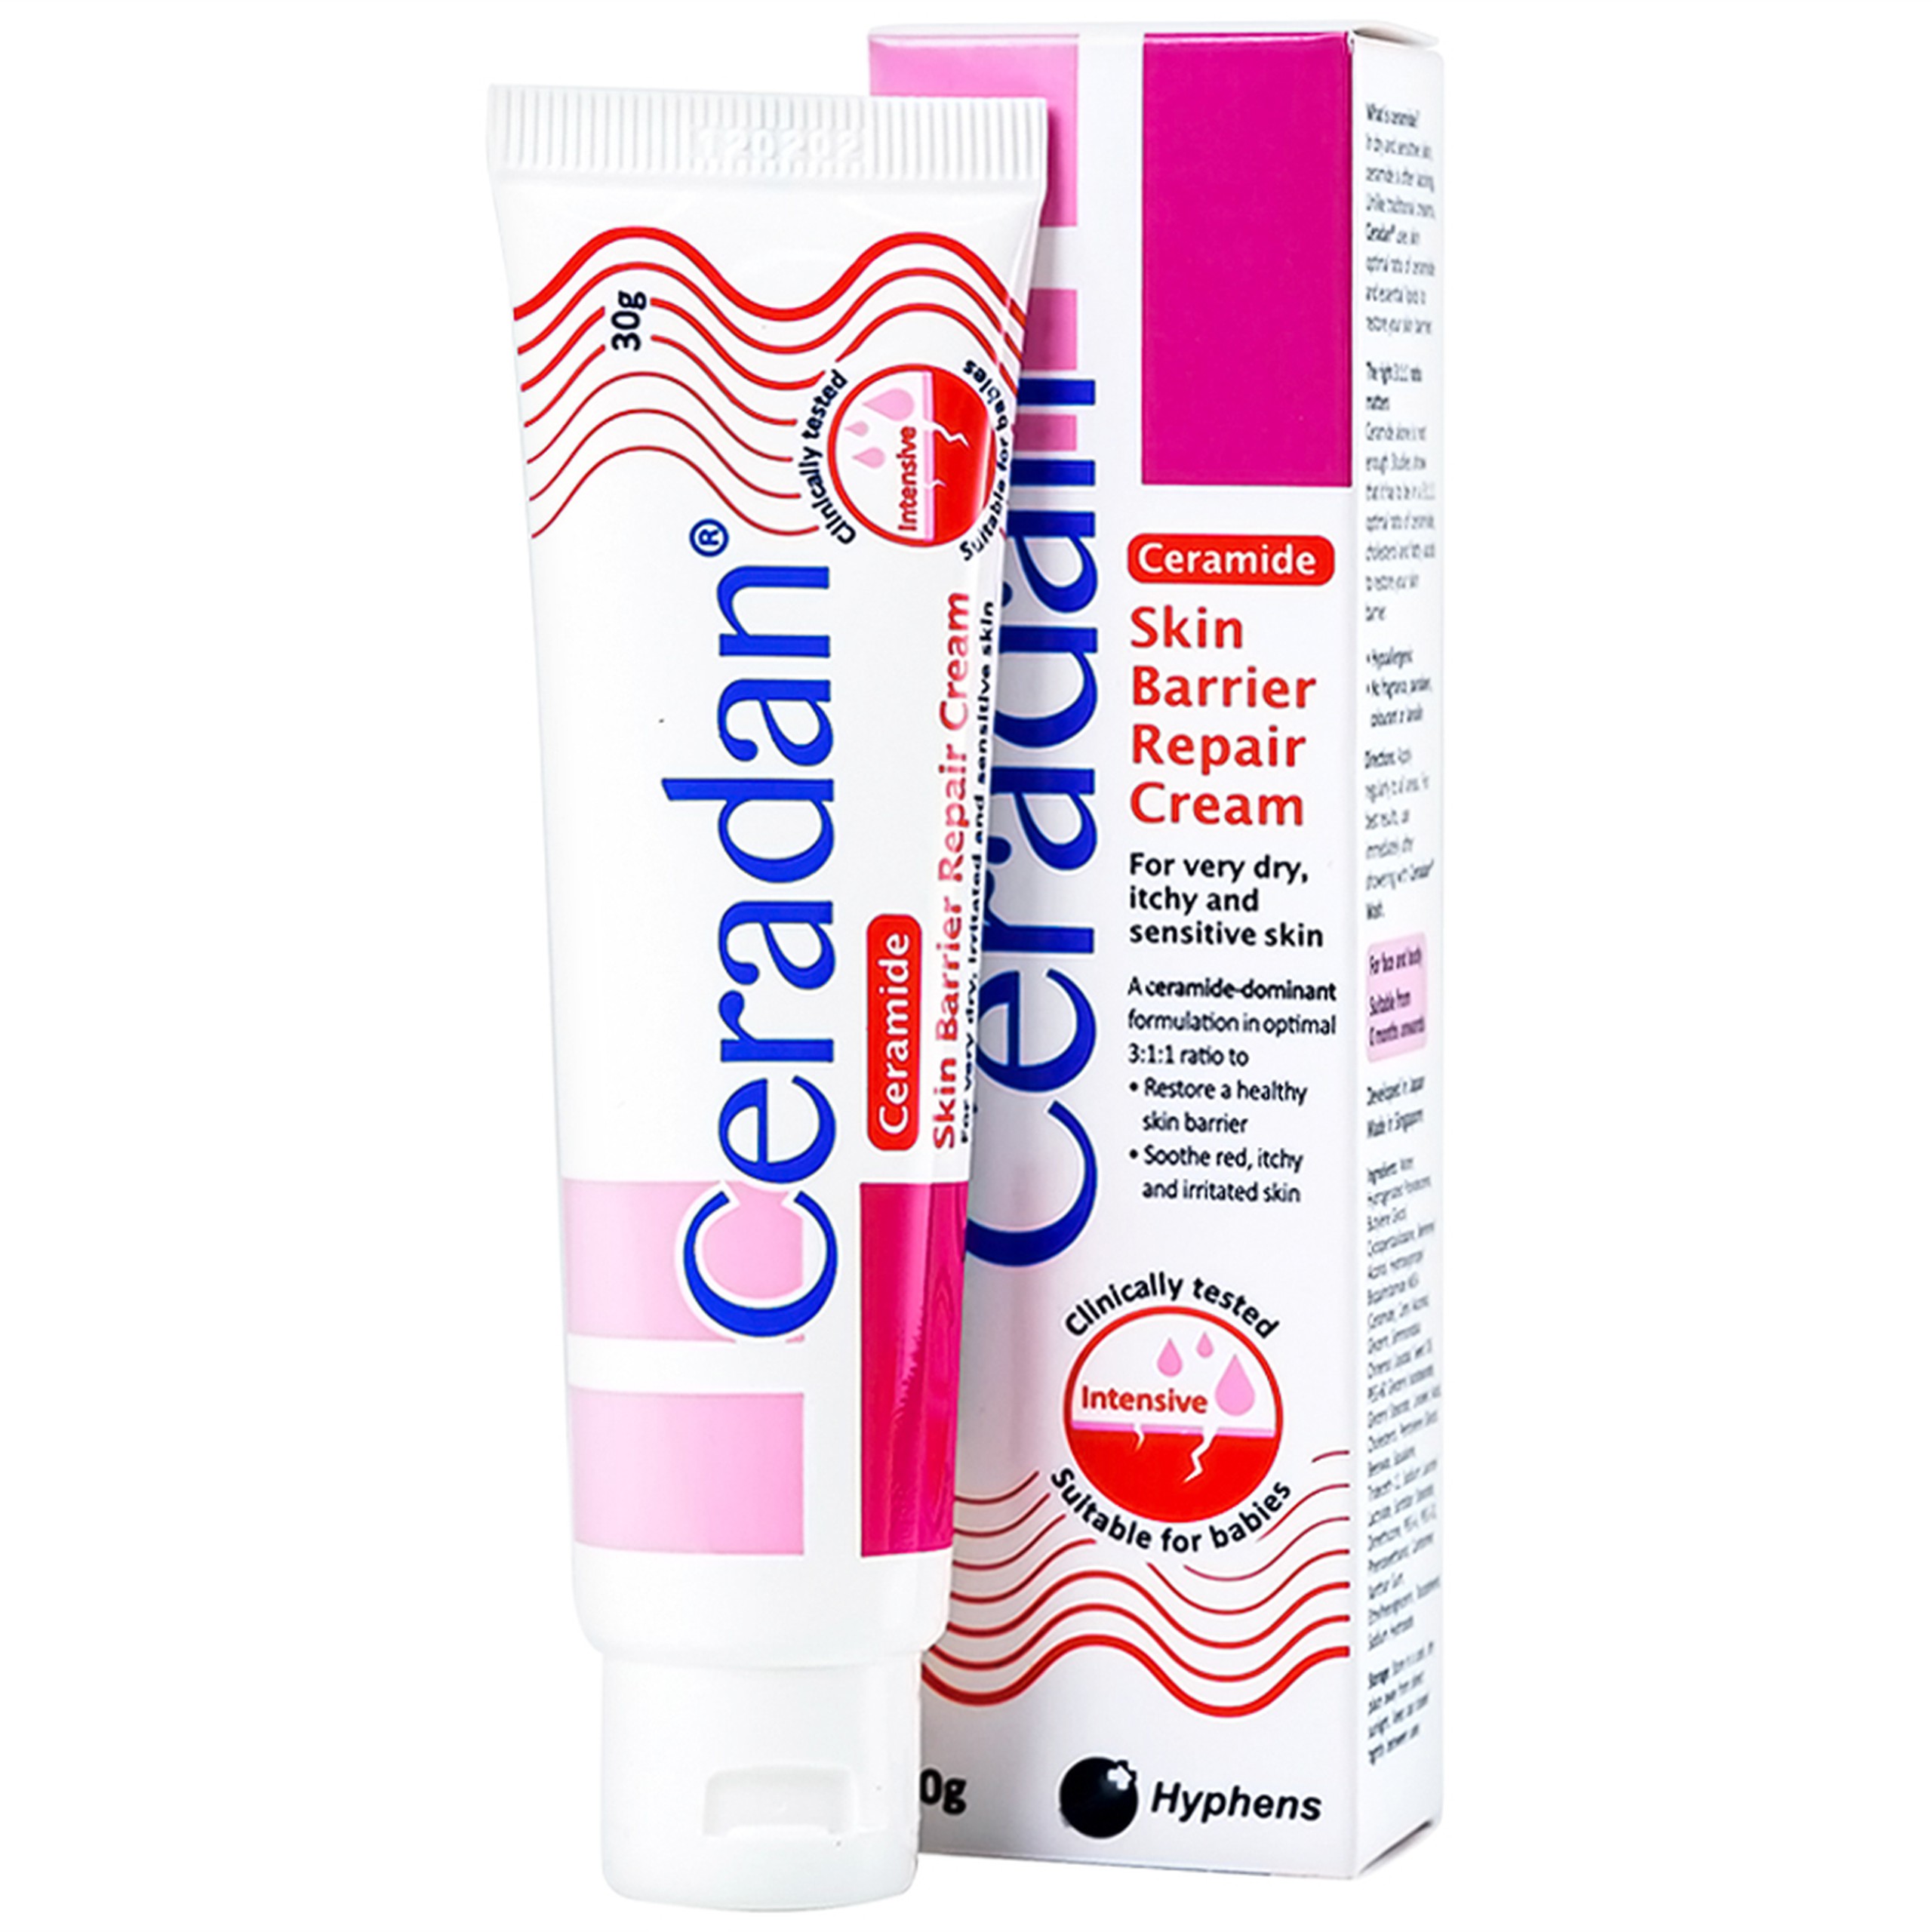 Kem phục hồi da Ceradan Ceramide Skin Barrier Repair Cream dành cho da khô, kích ứng và nhạy cảm (30g)